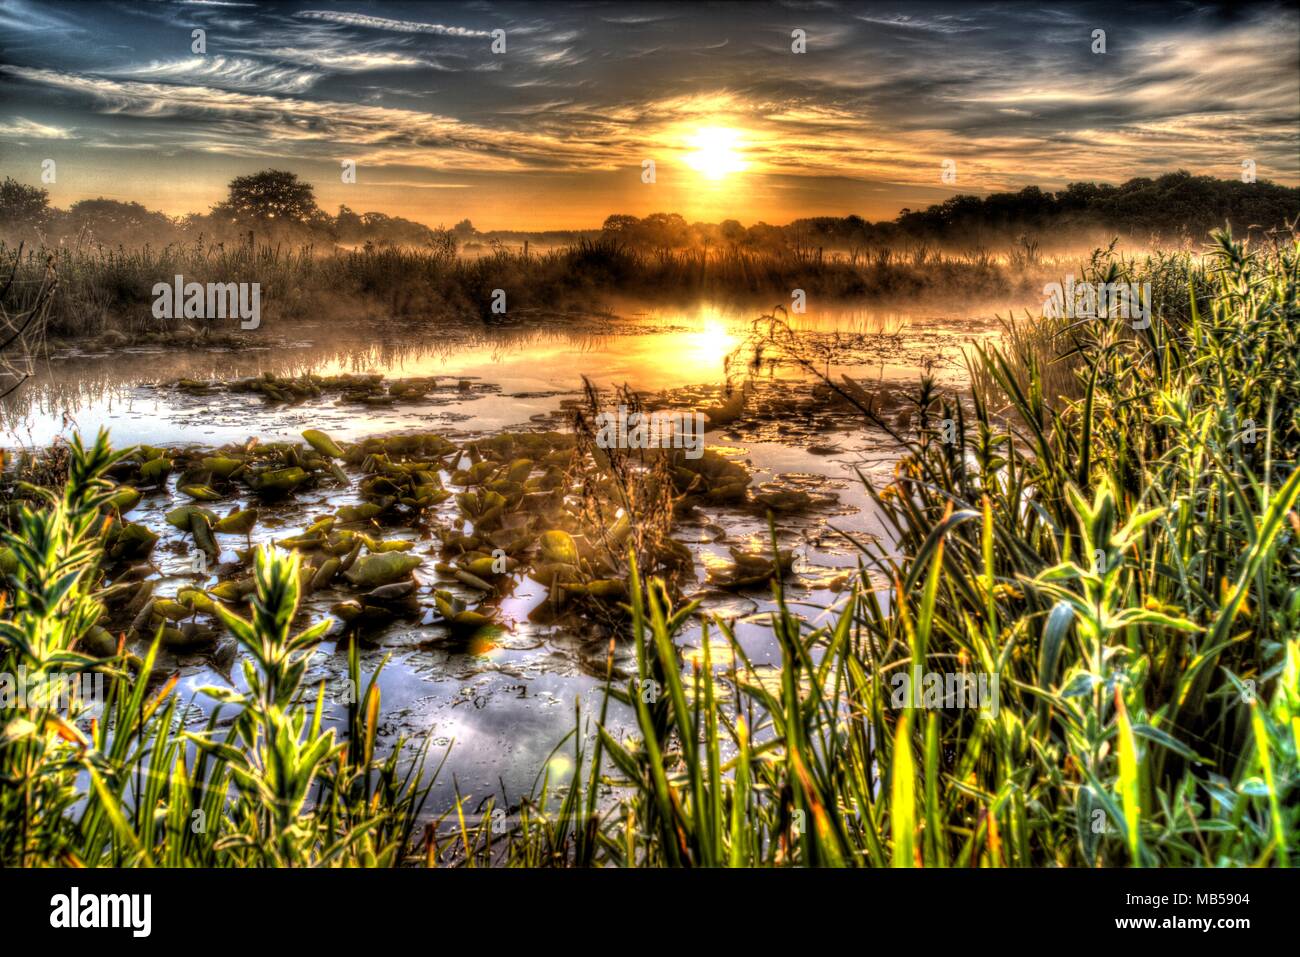 Aldea de Coddington, Inglaterra. Amanecer artístico vista de un estanque de agua dulce en un campo agrícola de Cheshire. Foto de stock